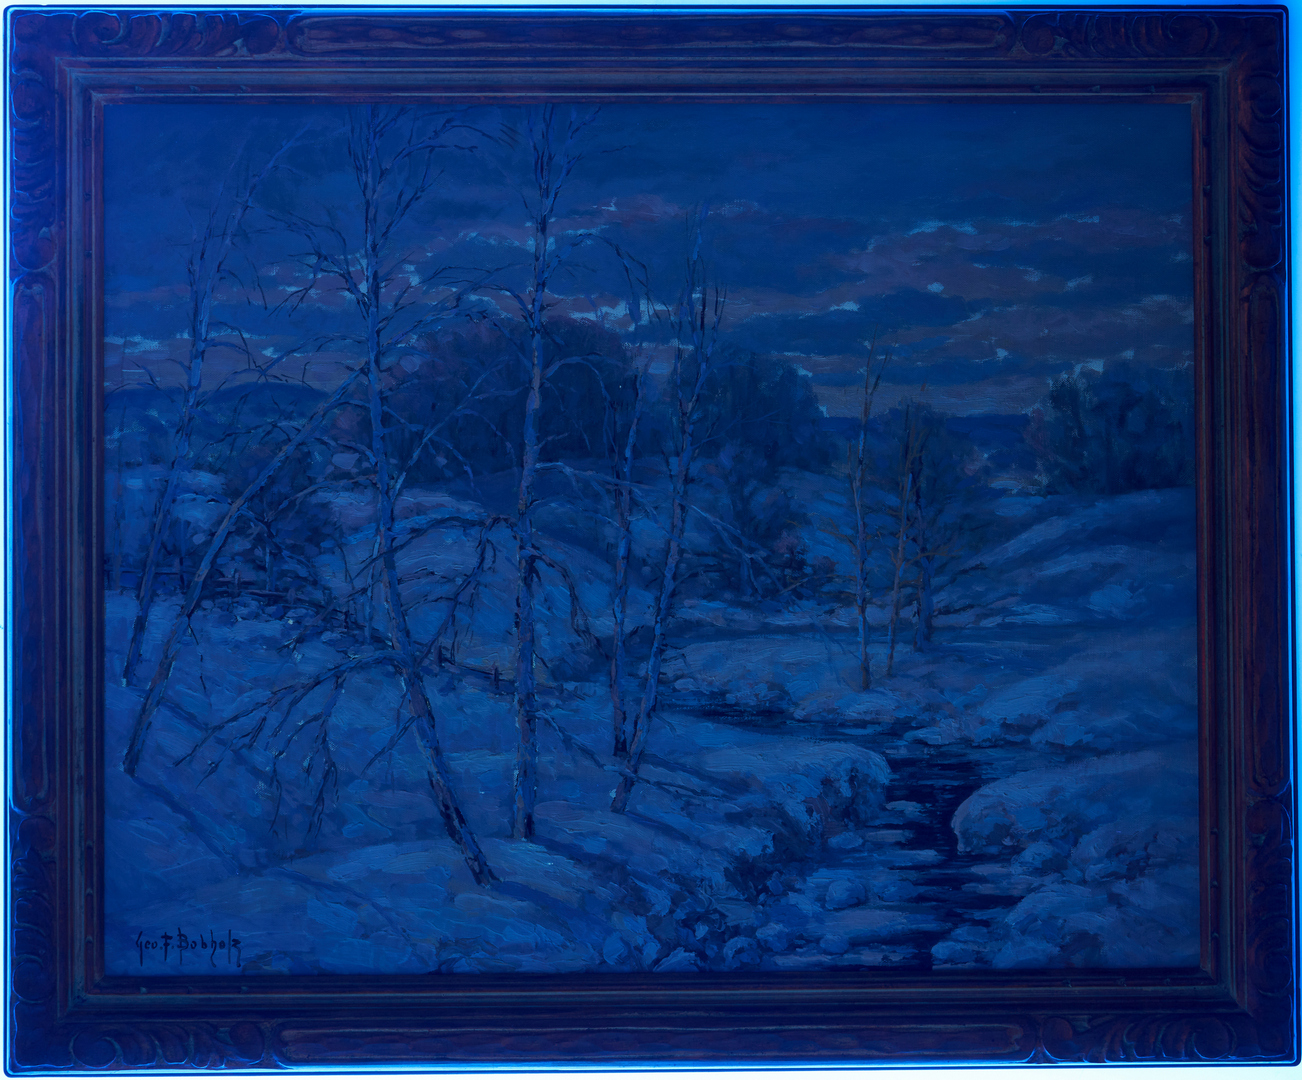 Lot 974: George Bobholz O/C, Winter Landscape